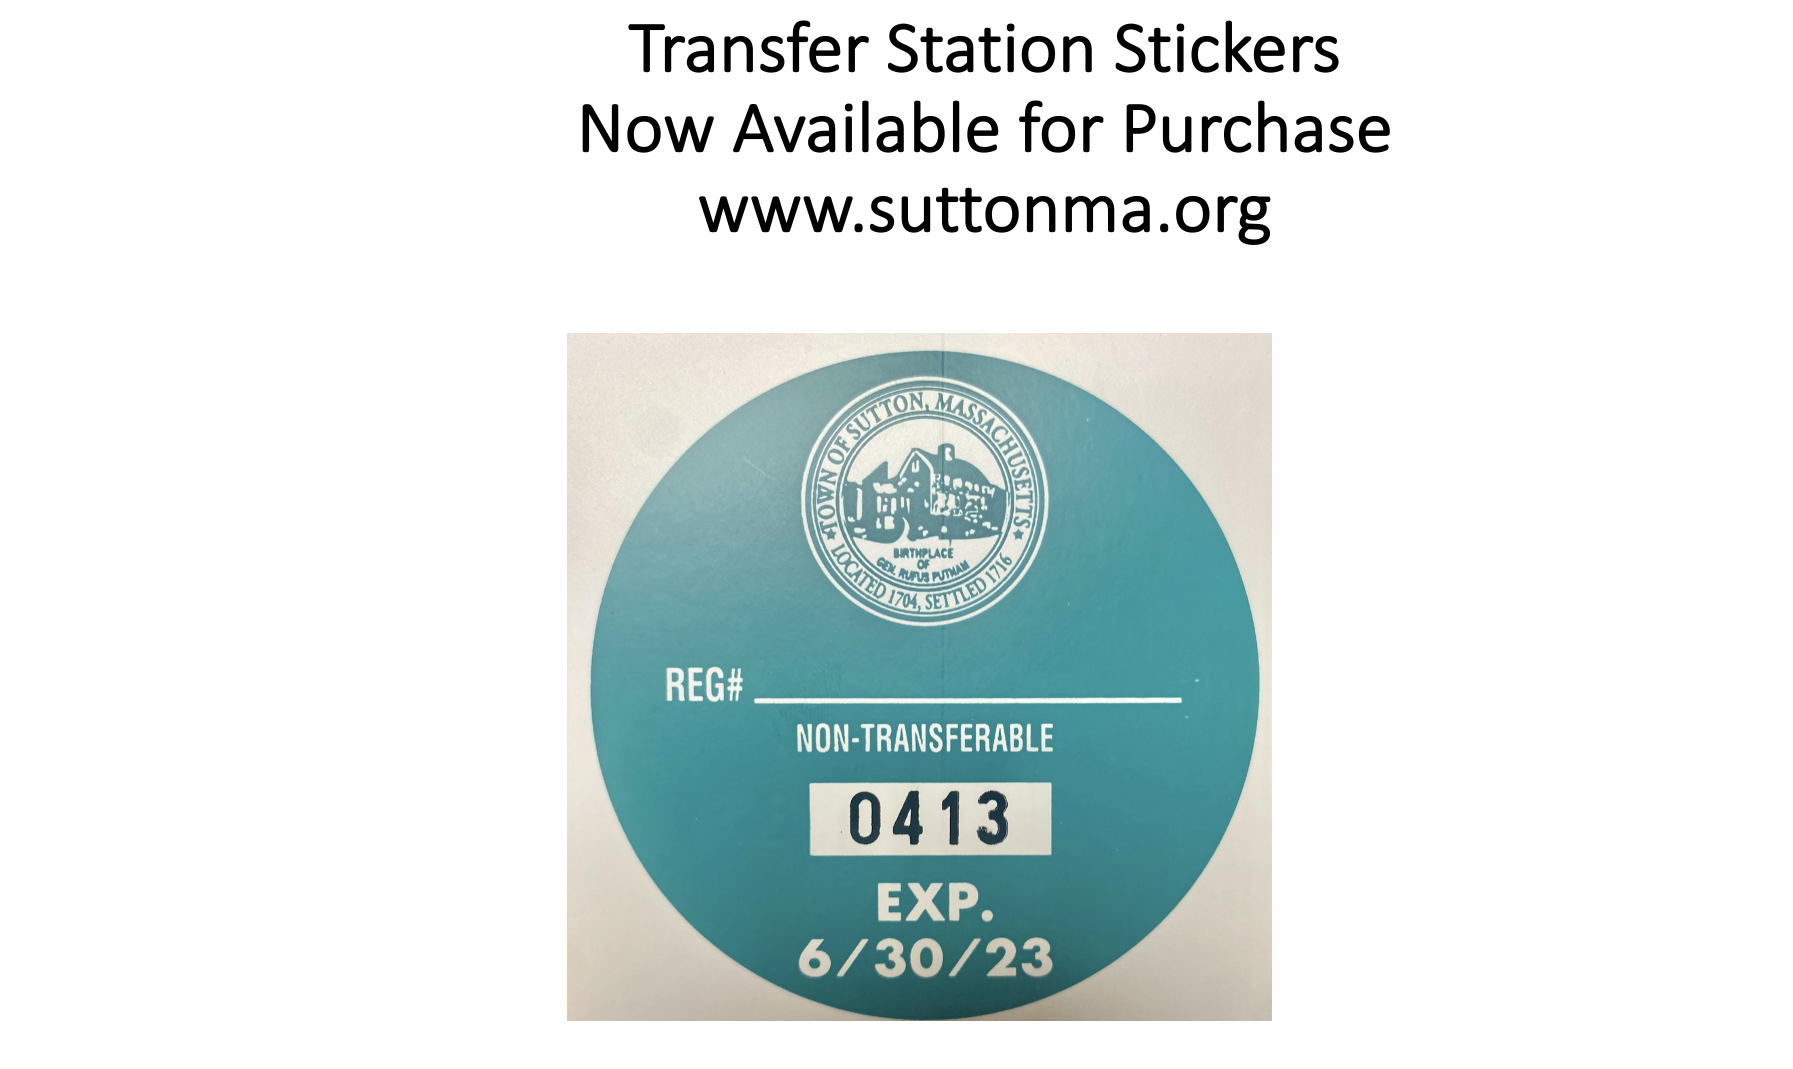 Transfer Station Sticker photo